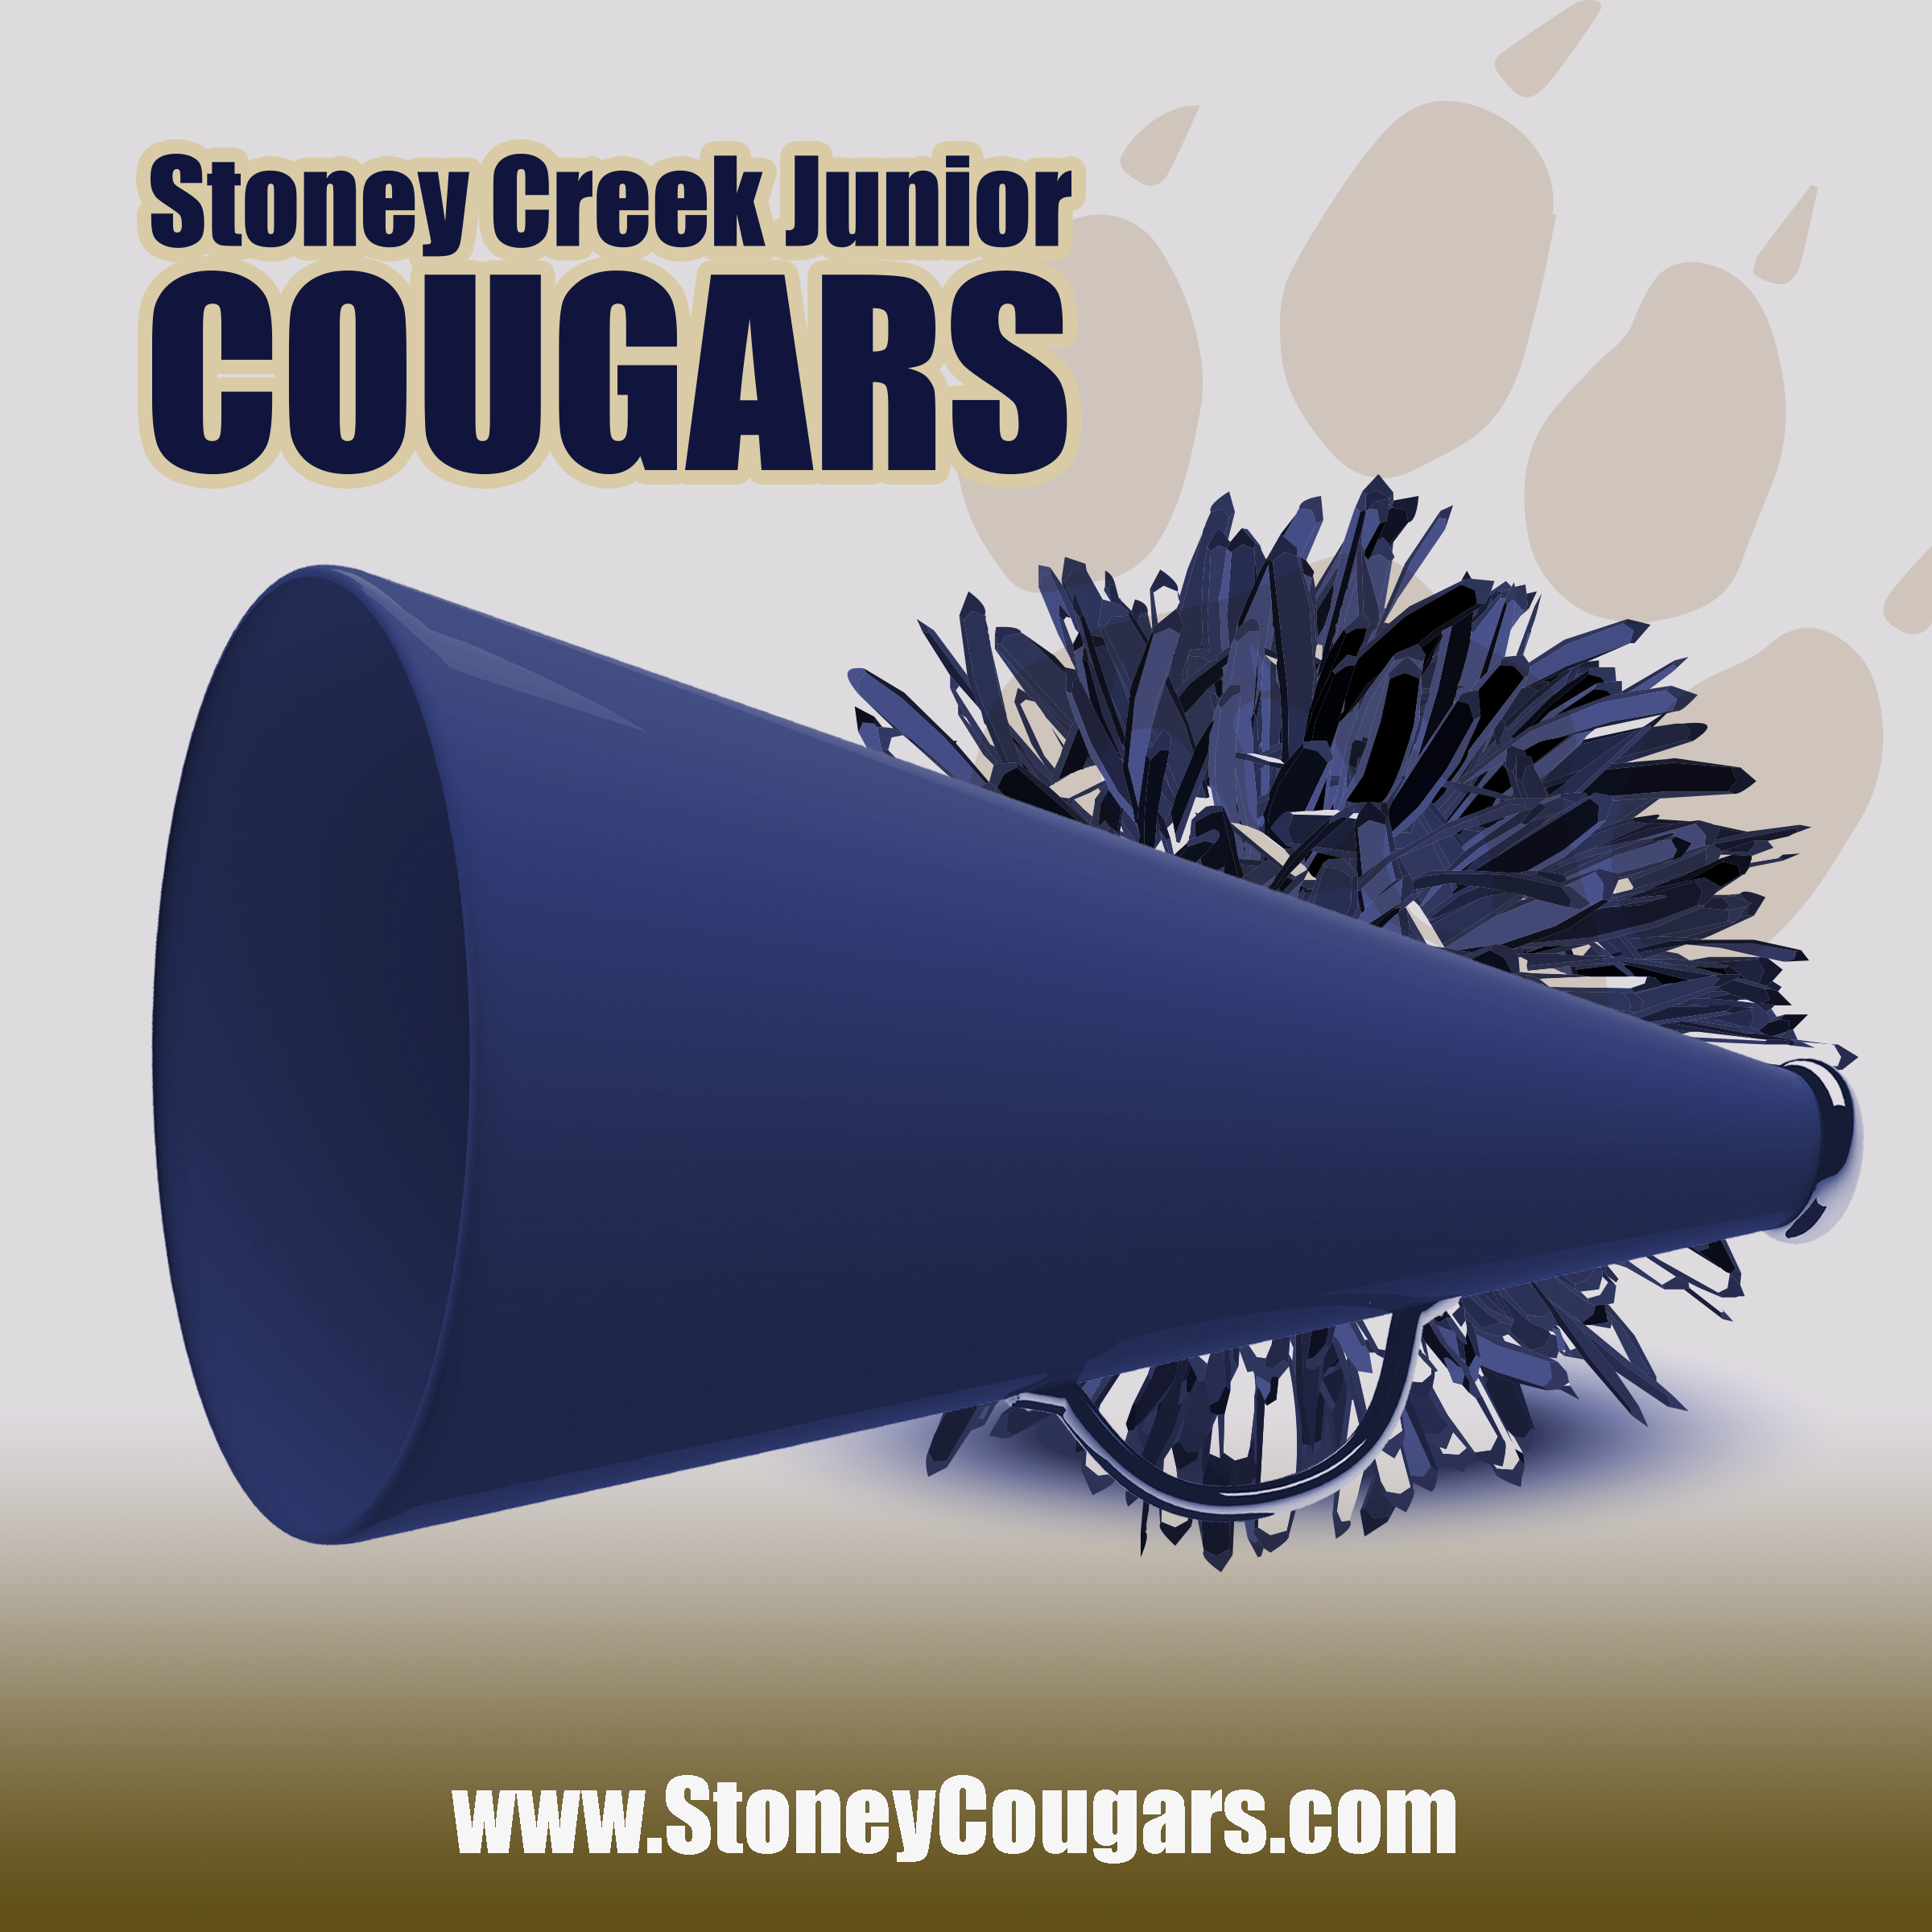 Stoney Creek Junior Cougar - Cheer Decal